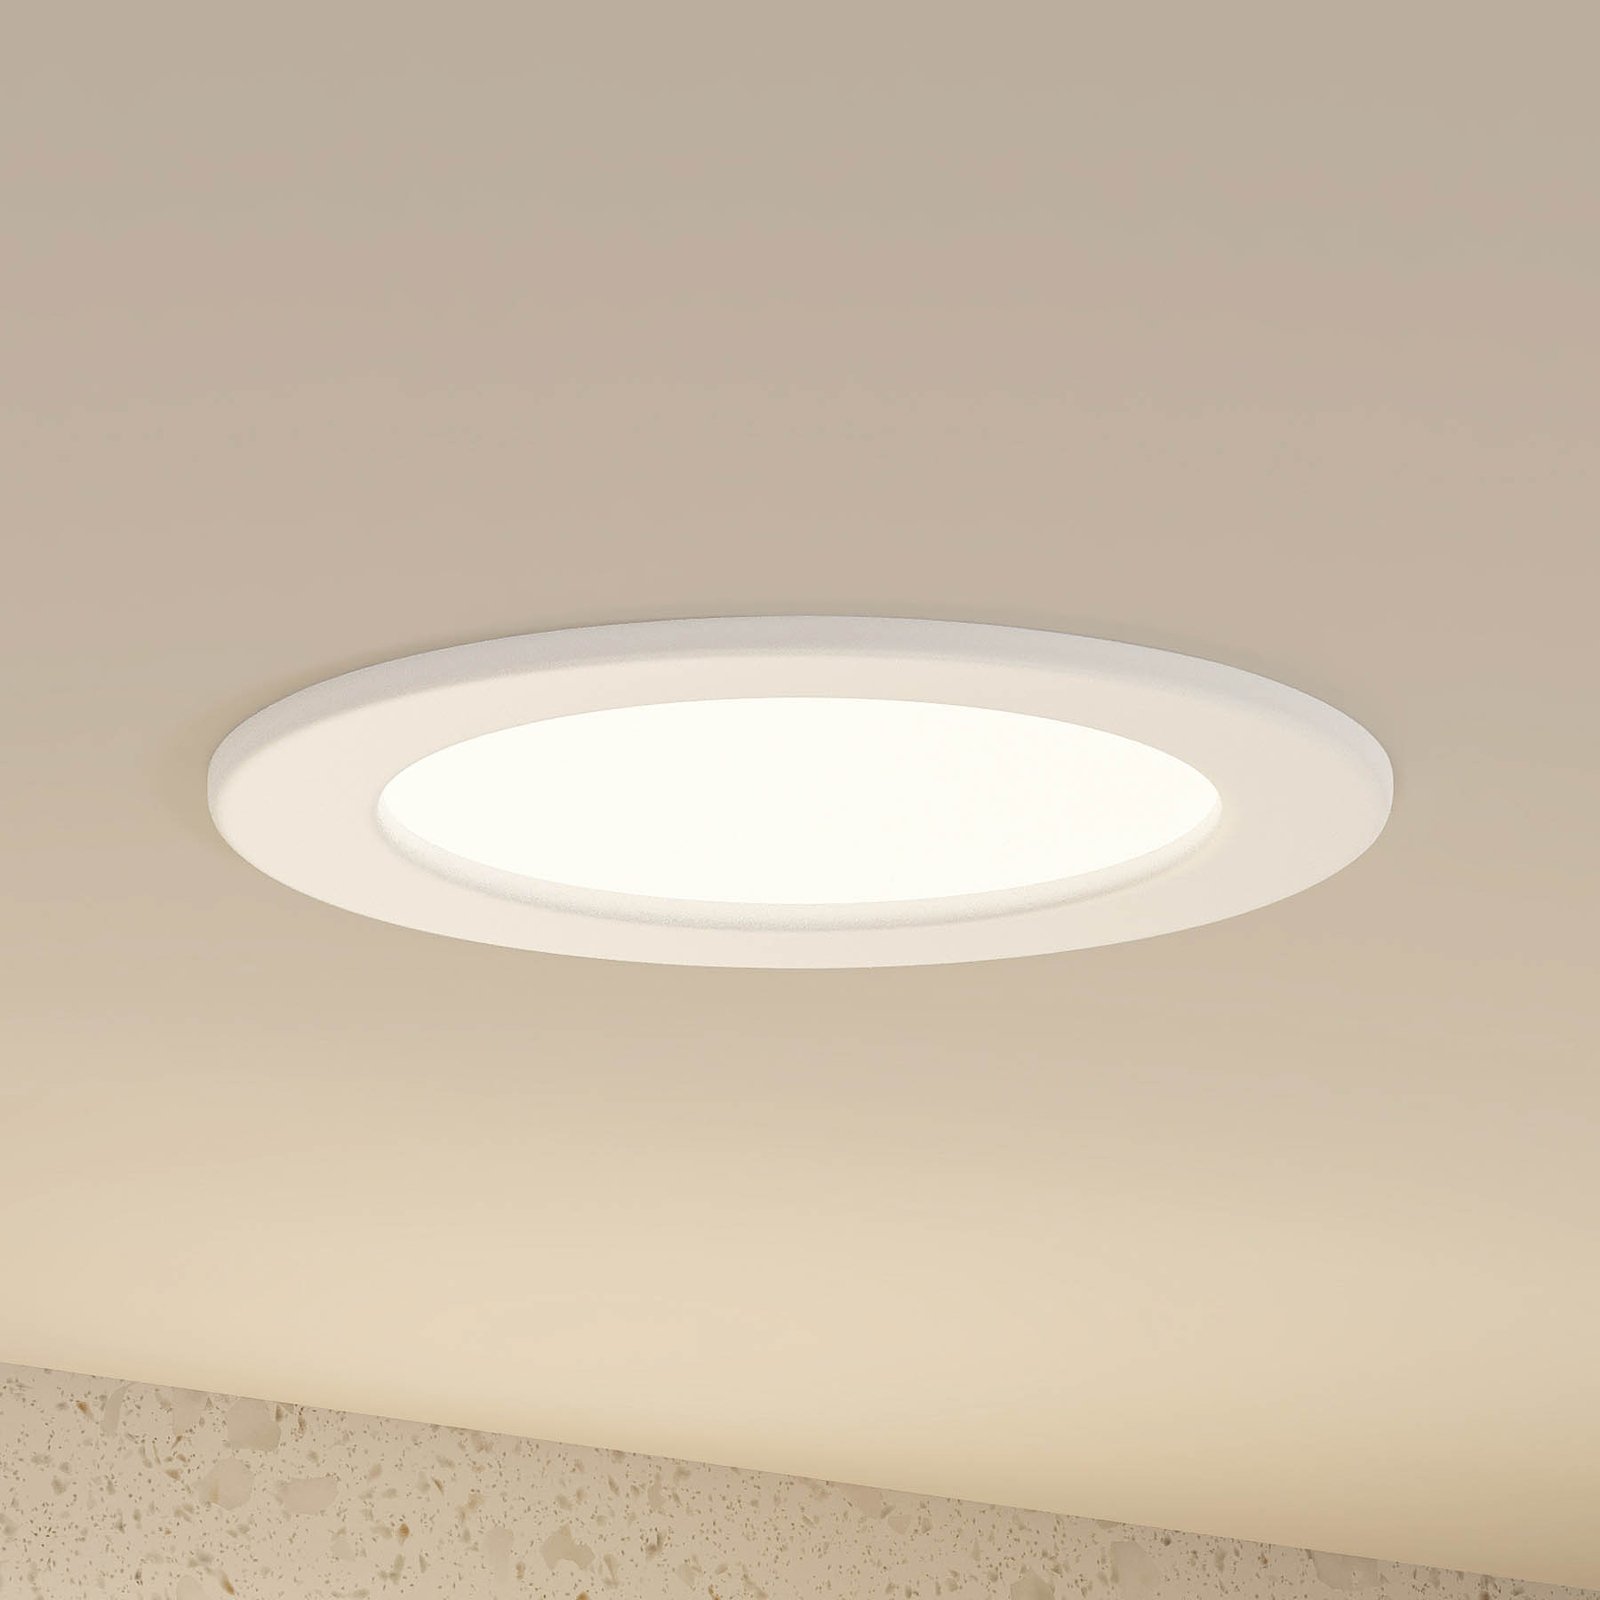 Prios Cadance LED beépíthető lámpa, fehér, 17 cm